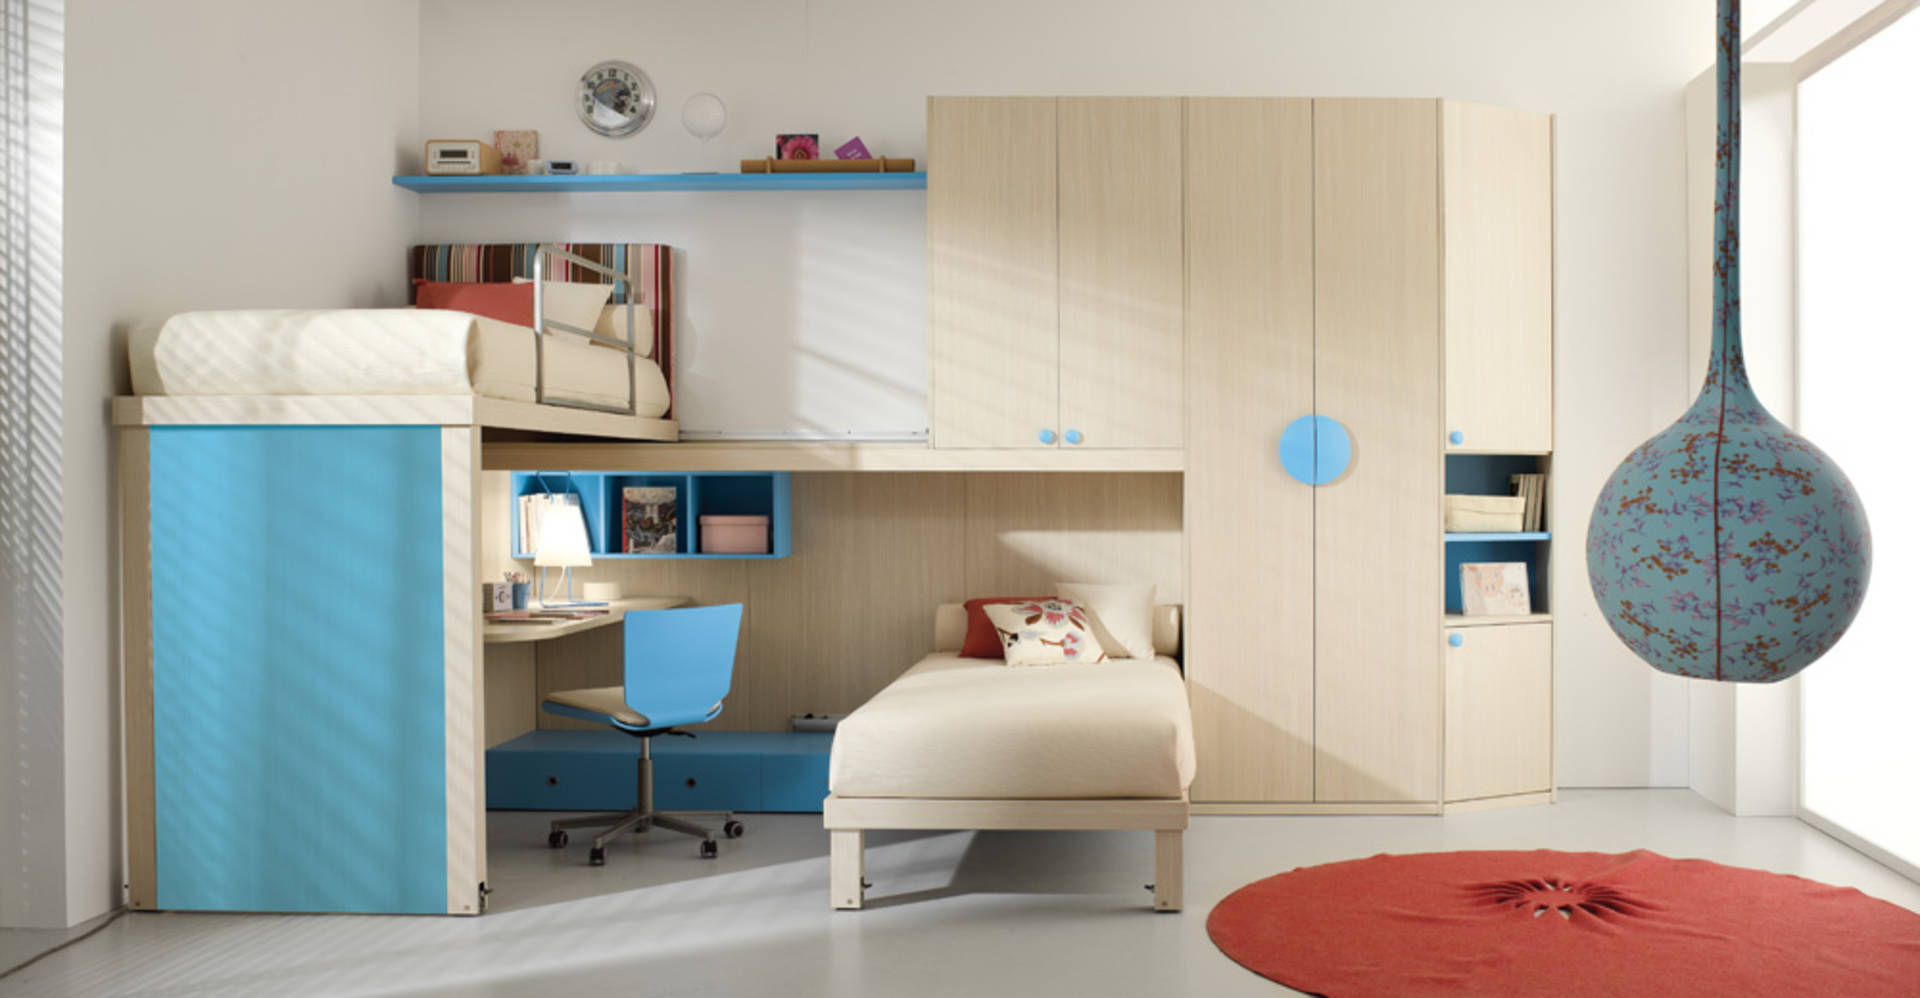 Featured image of post Modular Bedroom Cabinets / Architek design architect.darpan@yahu.com darpan sharma udaipur, rajasthan 9460330722 bedrooms bedroom design bedroom interior design room design bedroom.